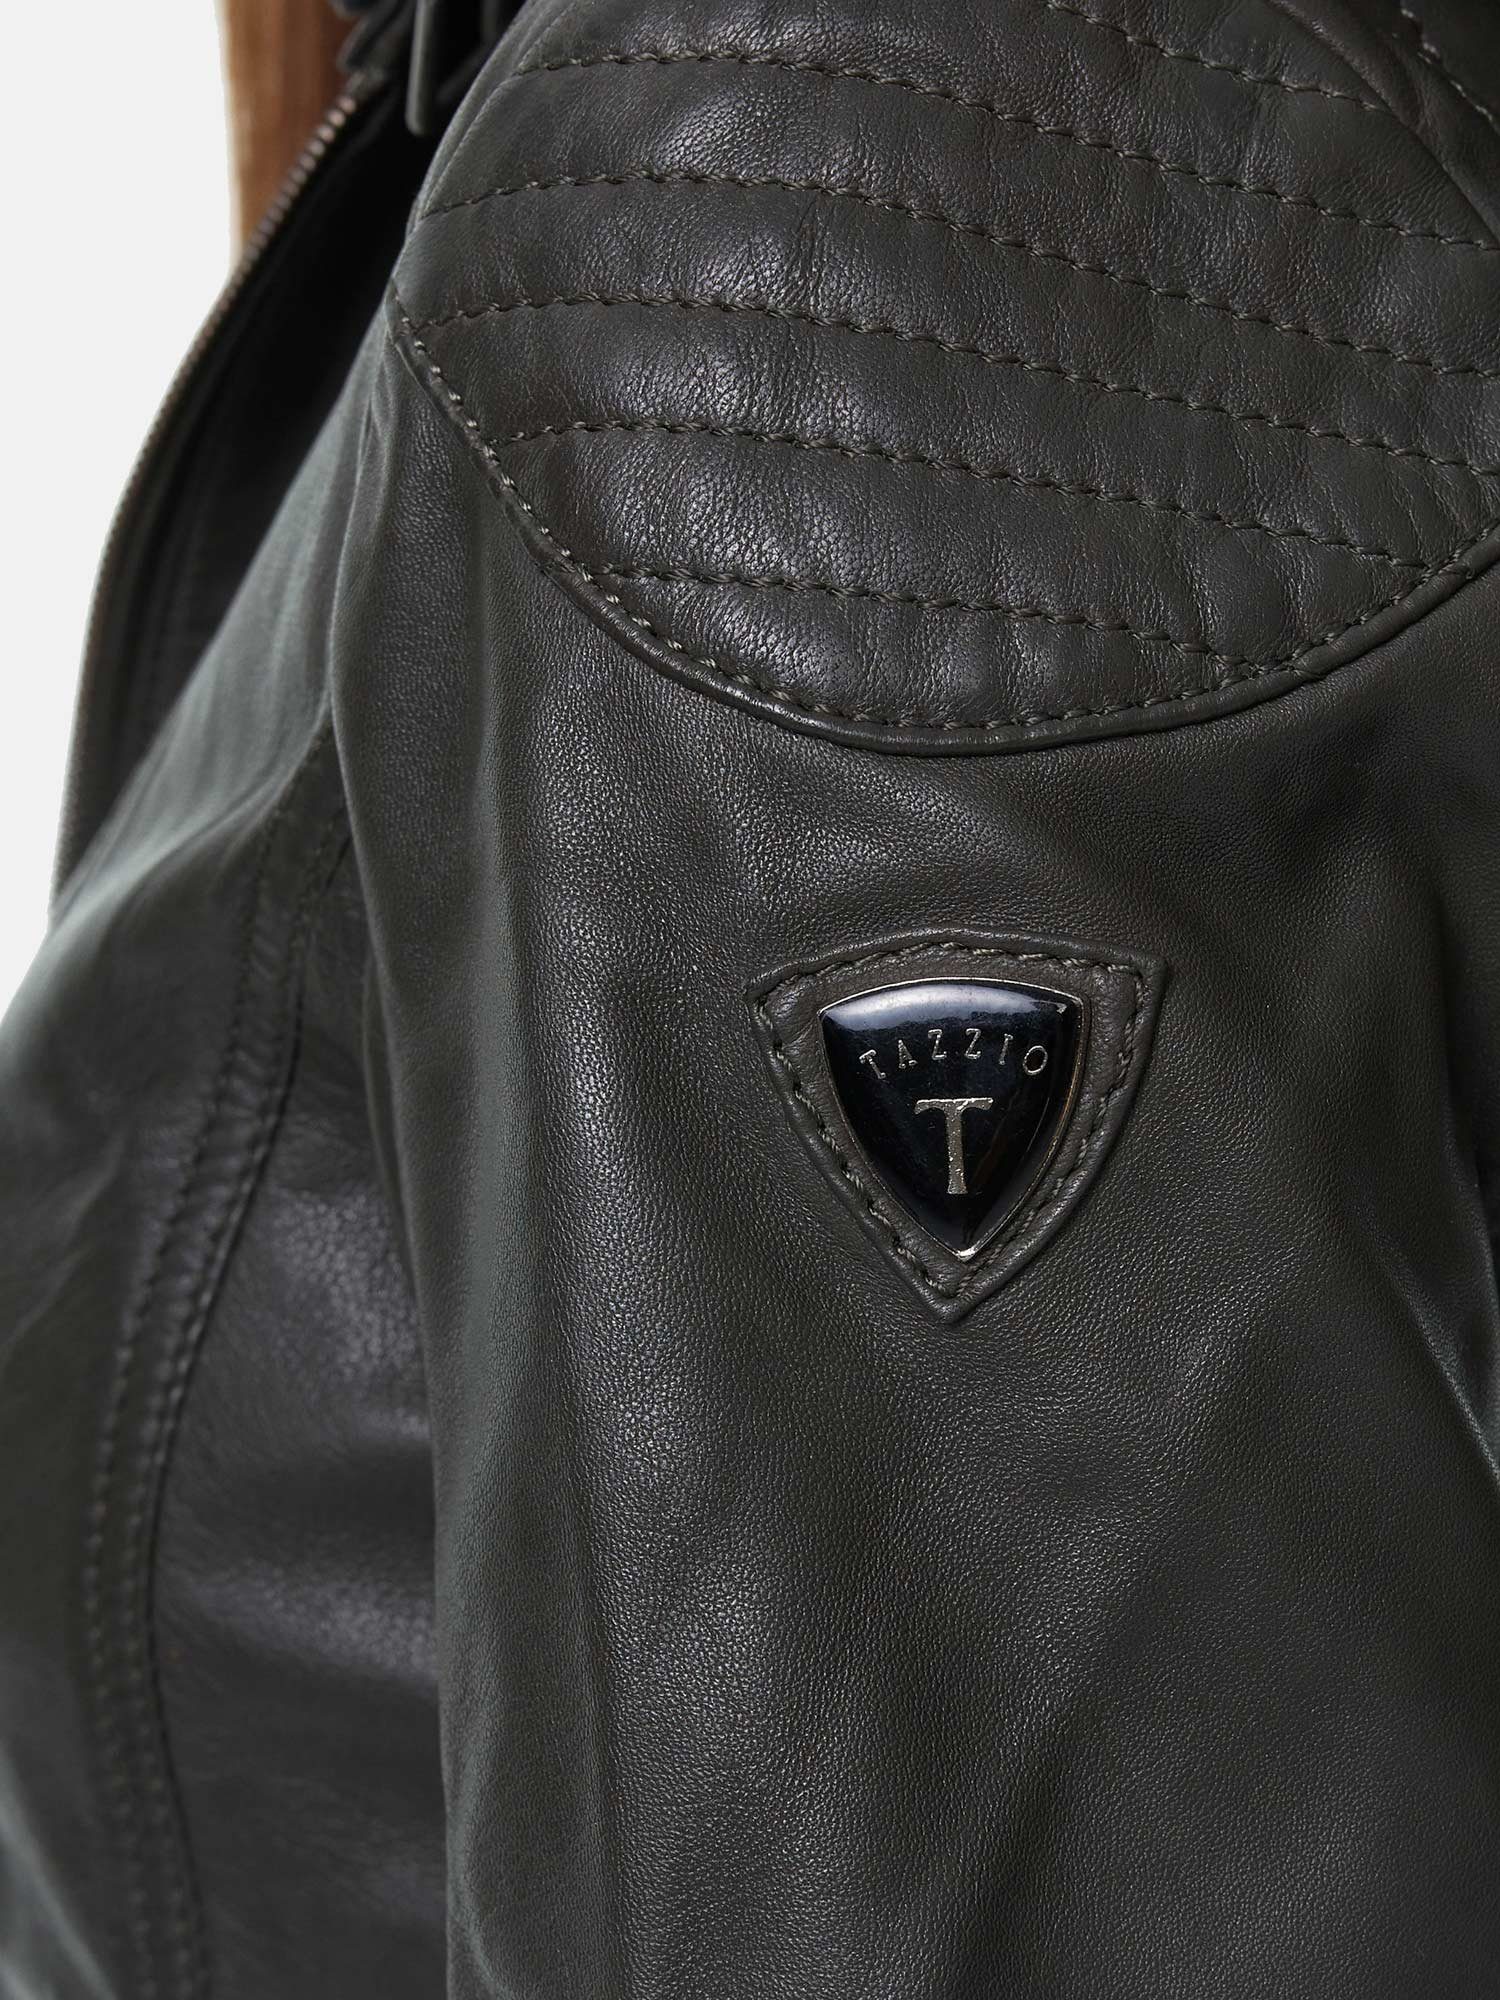 abnehmbarer khaki Lederjacke F503 Tazzio Damen Look im Leder Jacke mit Kapuze Biker